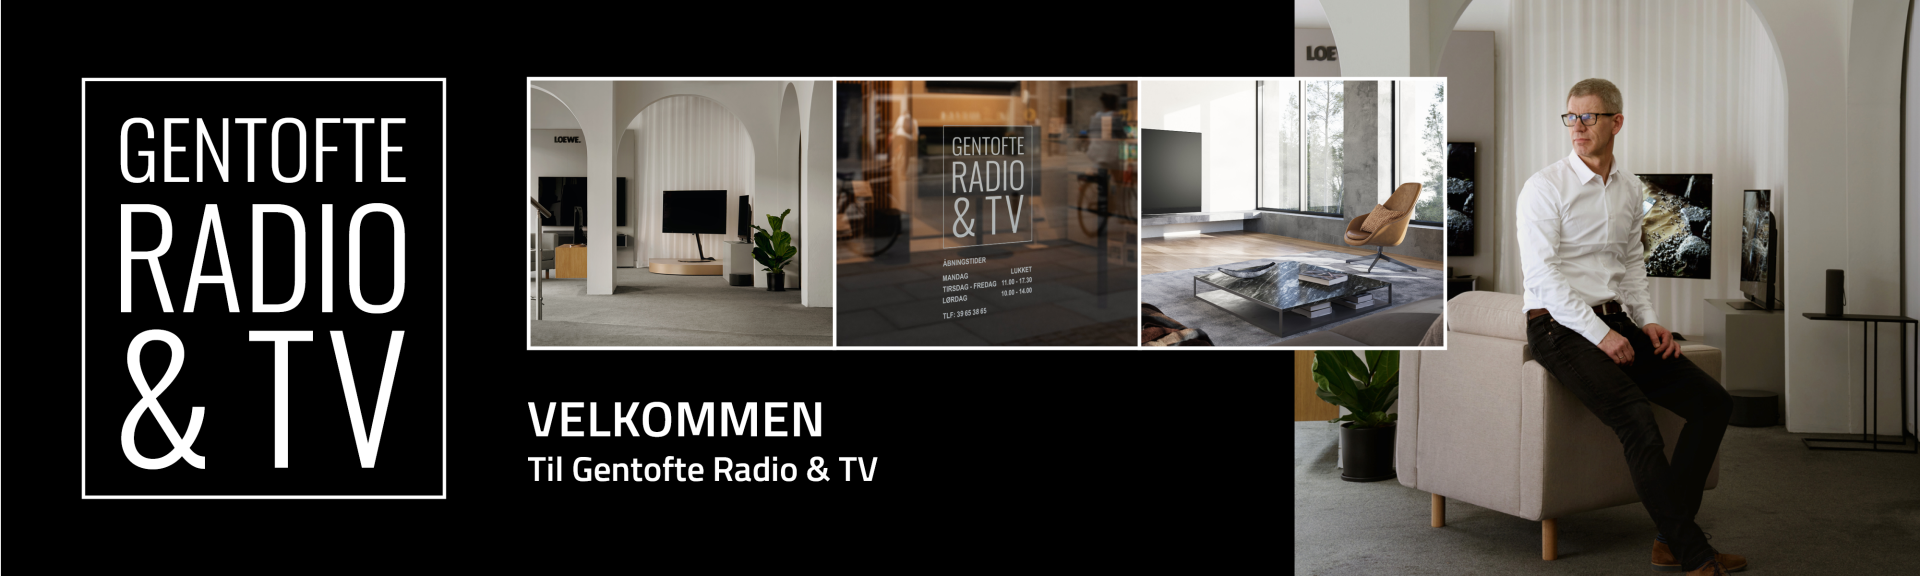 Gentofte Radio og TV